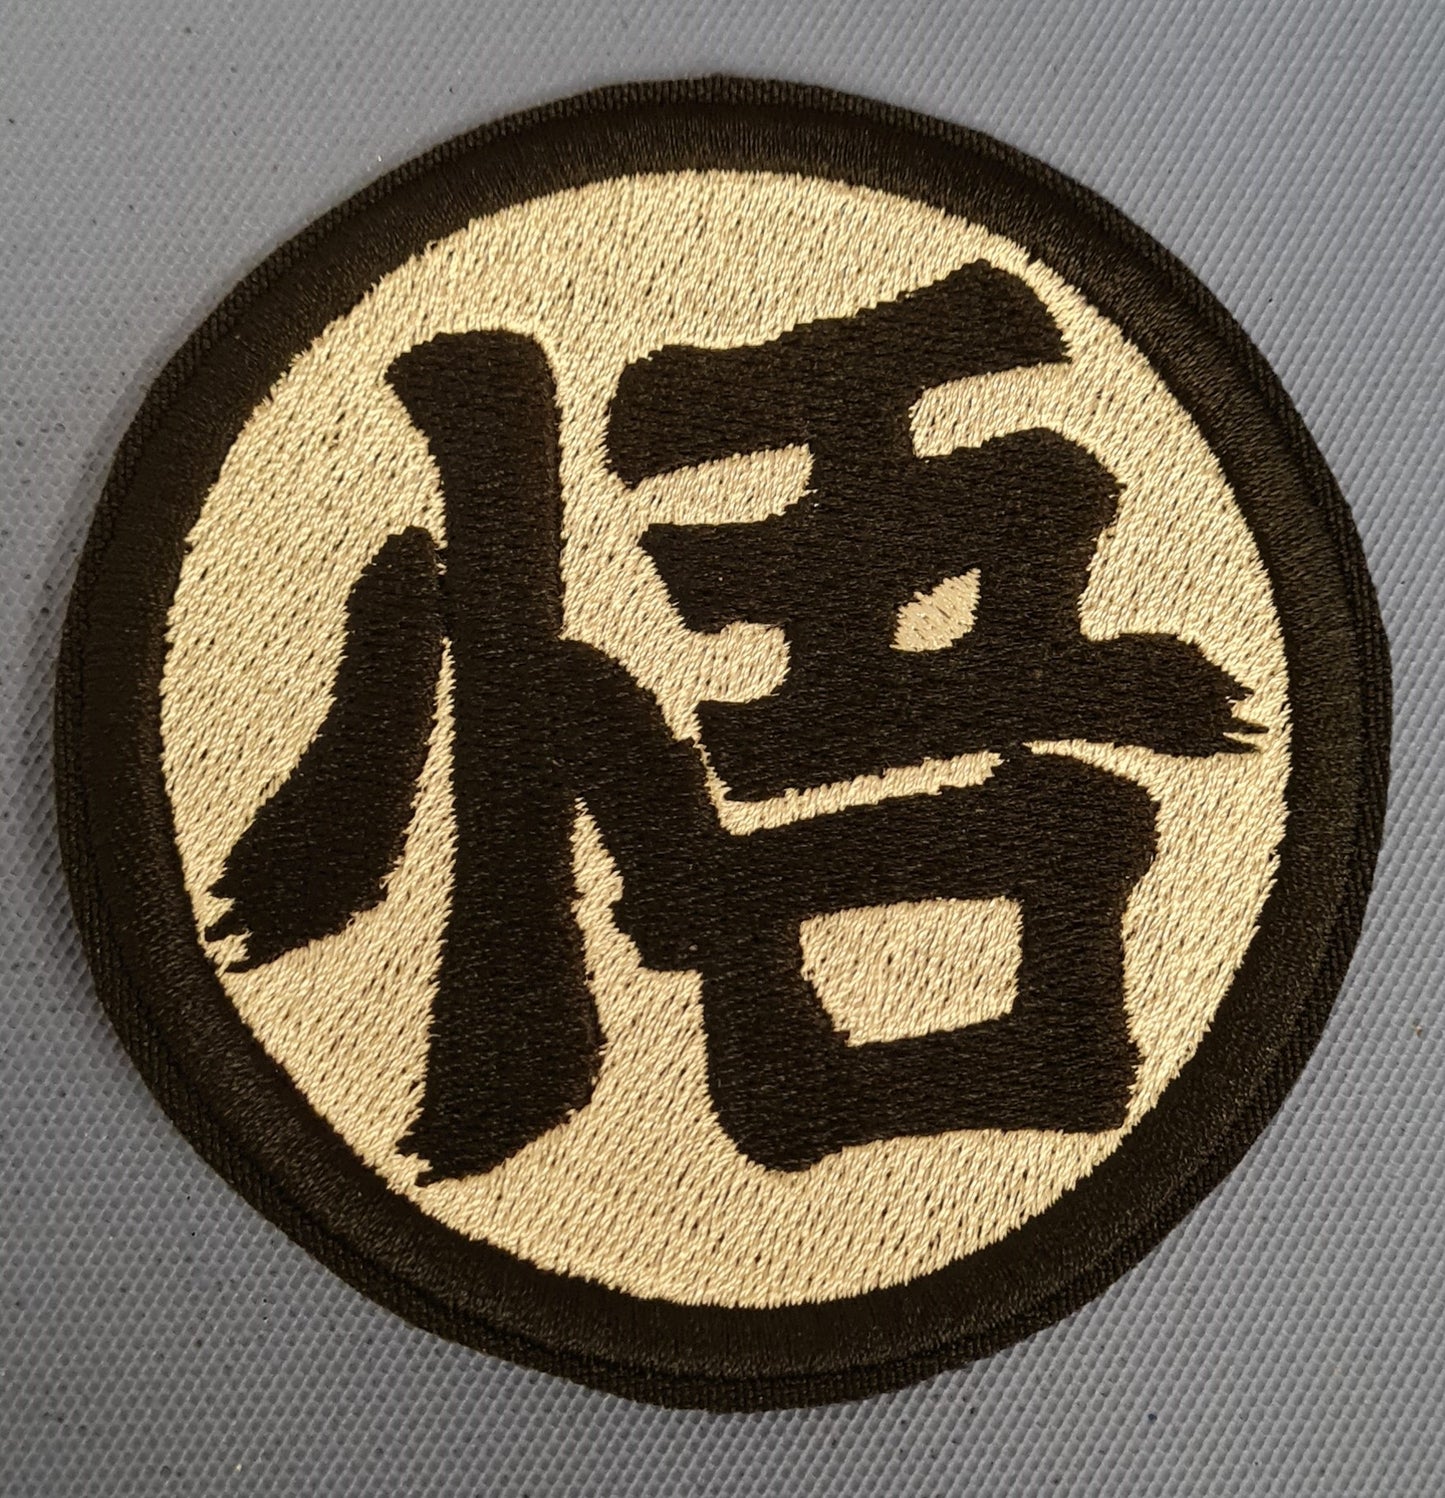 Dragonball Z, King Vegeta, Saiyan Warrior Class, Anime Embroidered Heat seal Patches.